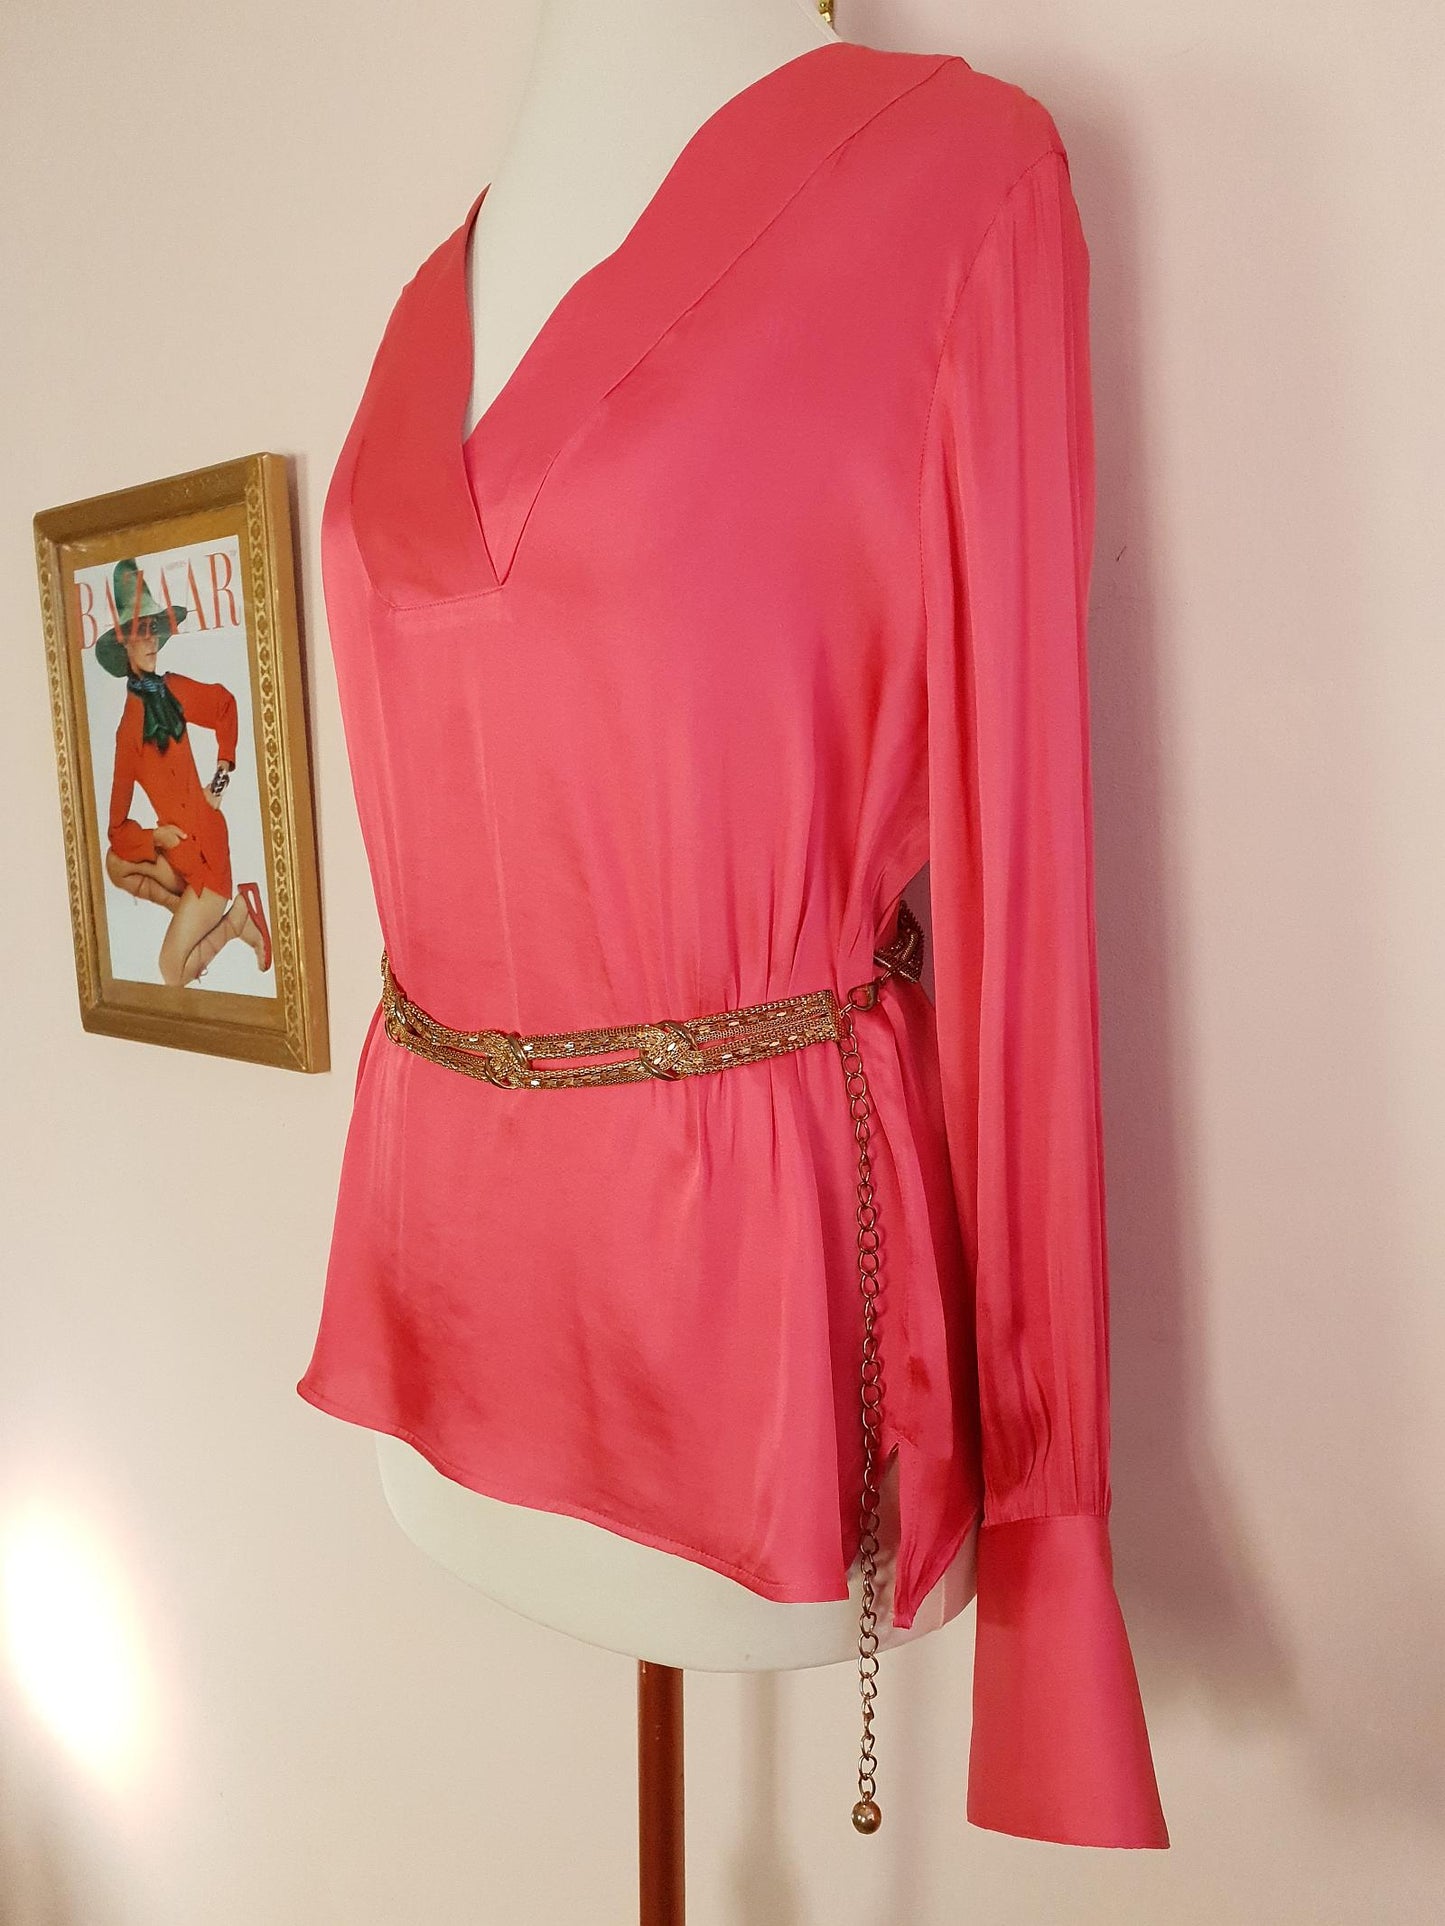 Vintage 1970s Silk Blouse Salmon Pink Retro Shirt Top